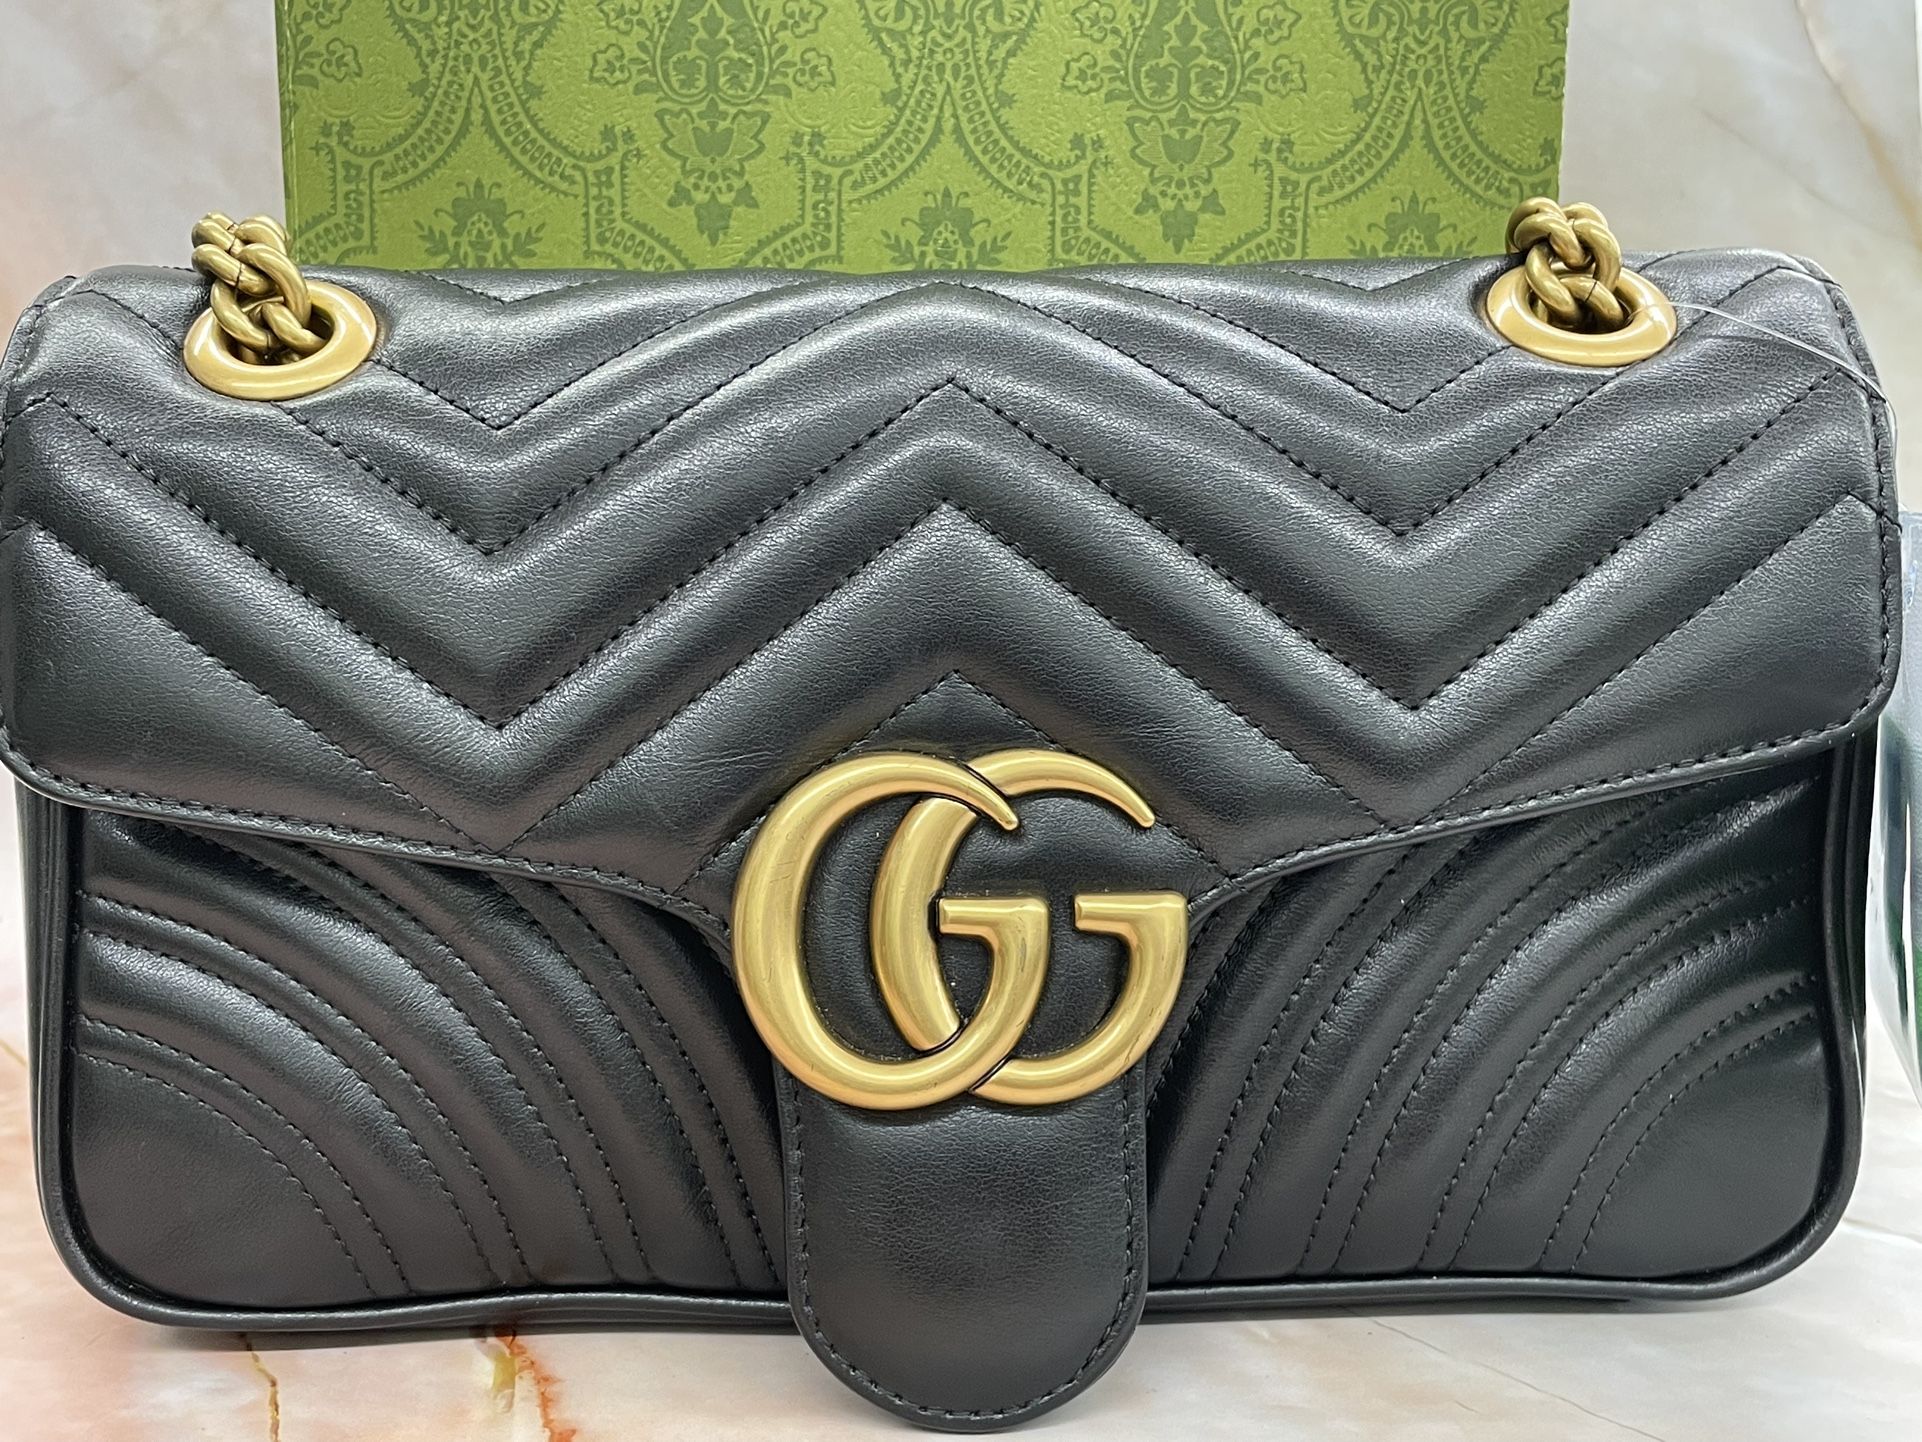 Gucci Marmont shoulder bag 